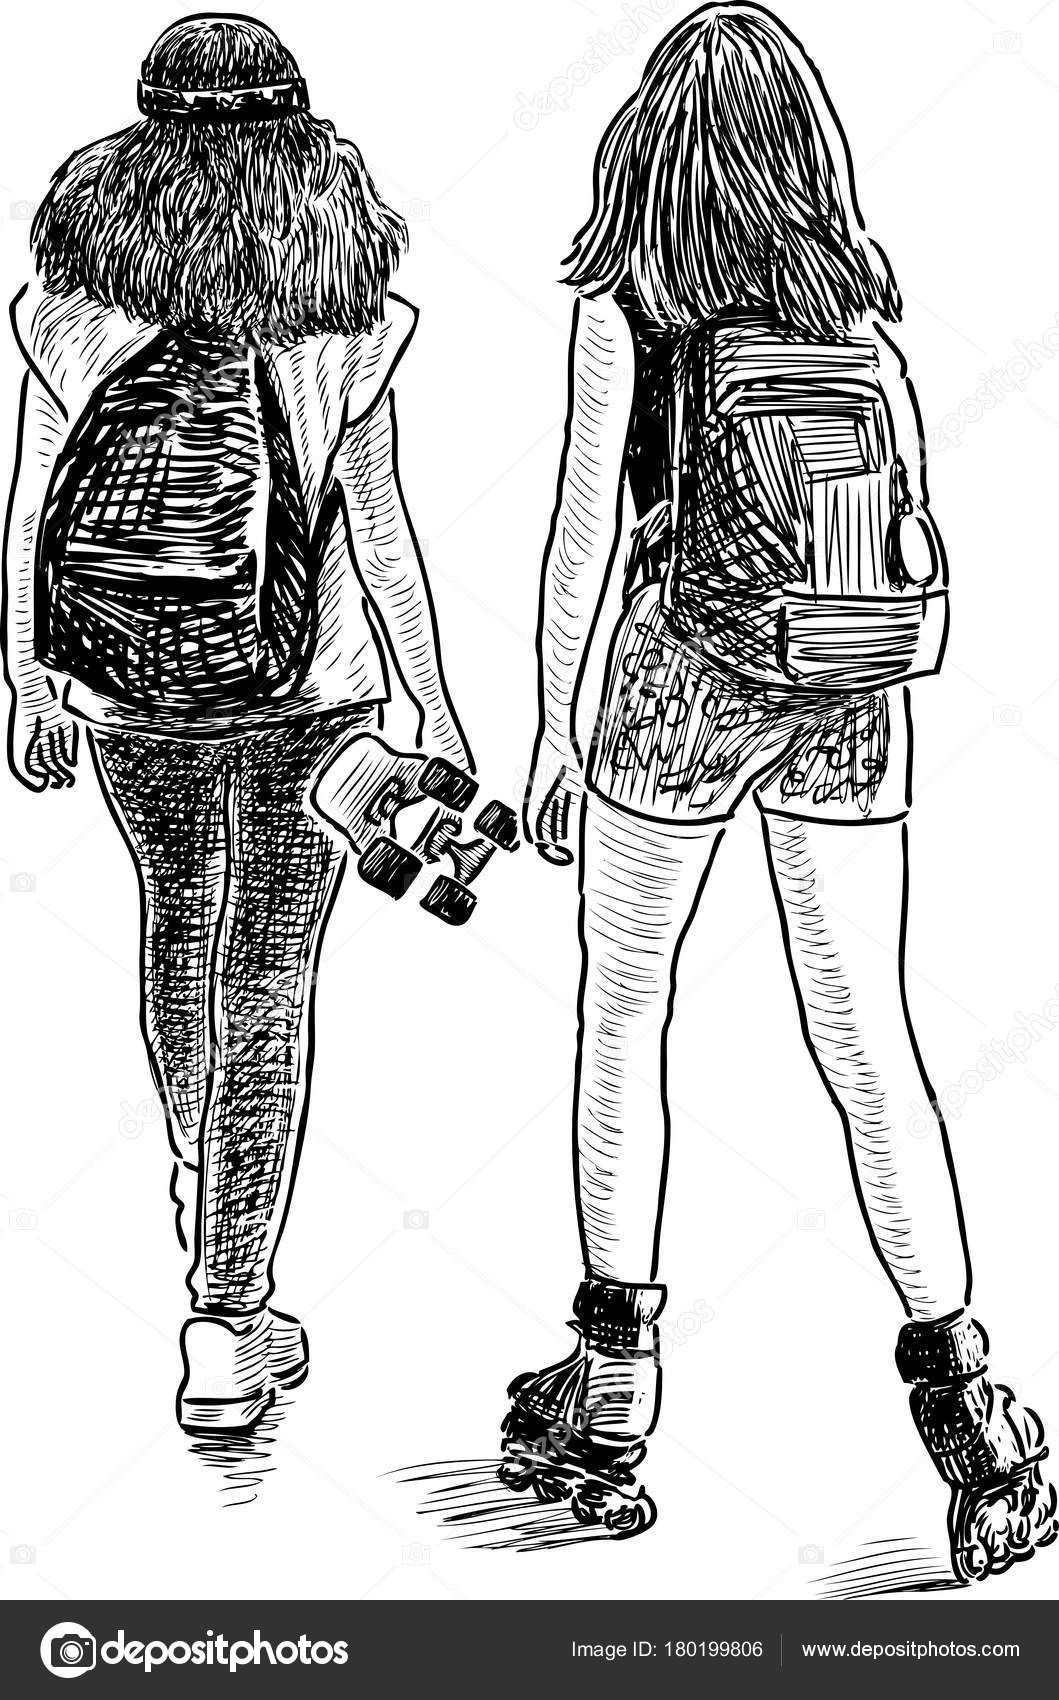 https://st3.depositphotos.com/3258967/18019/v/1600/depositphotos_180199806-stock-illustration-sports-teen-girls-stroll.jpg